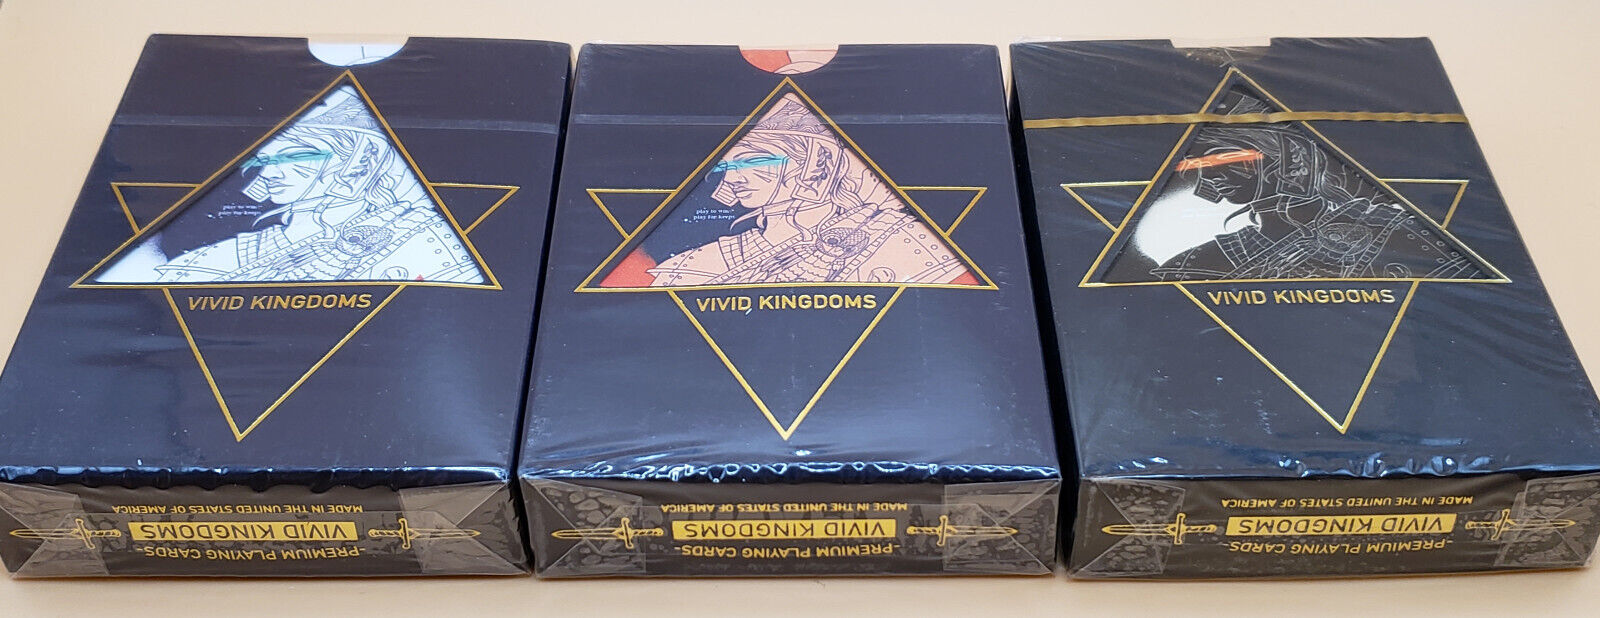 Vivid Kingdoms Playing Cards - Ten Hundred - 3 Deck Set - Limited Edition